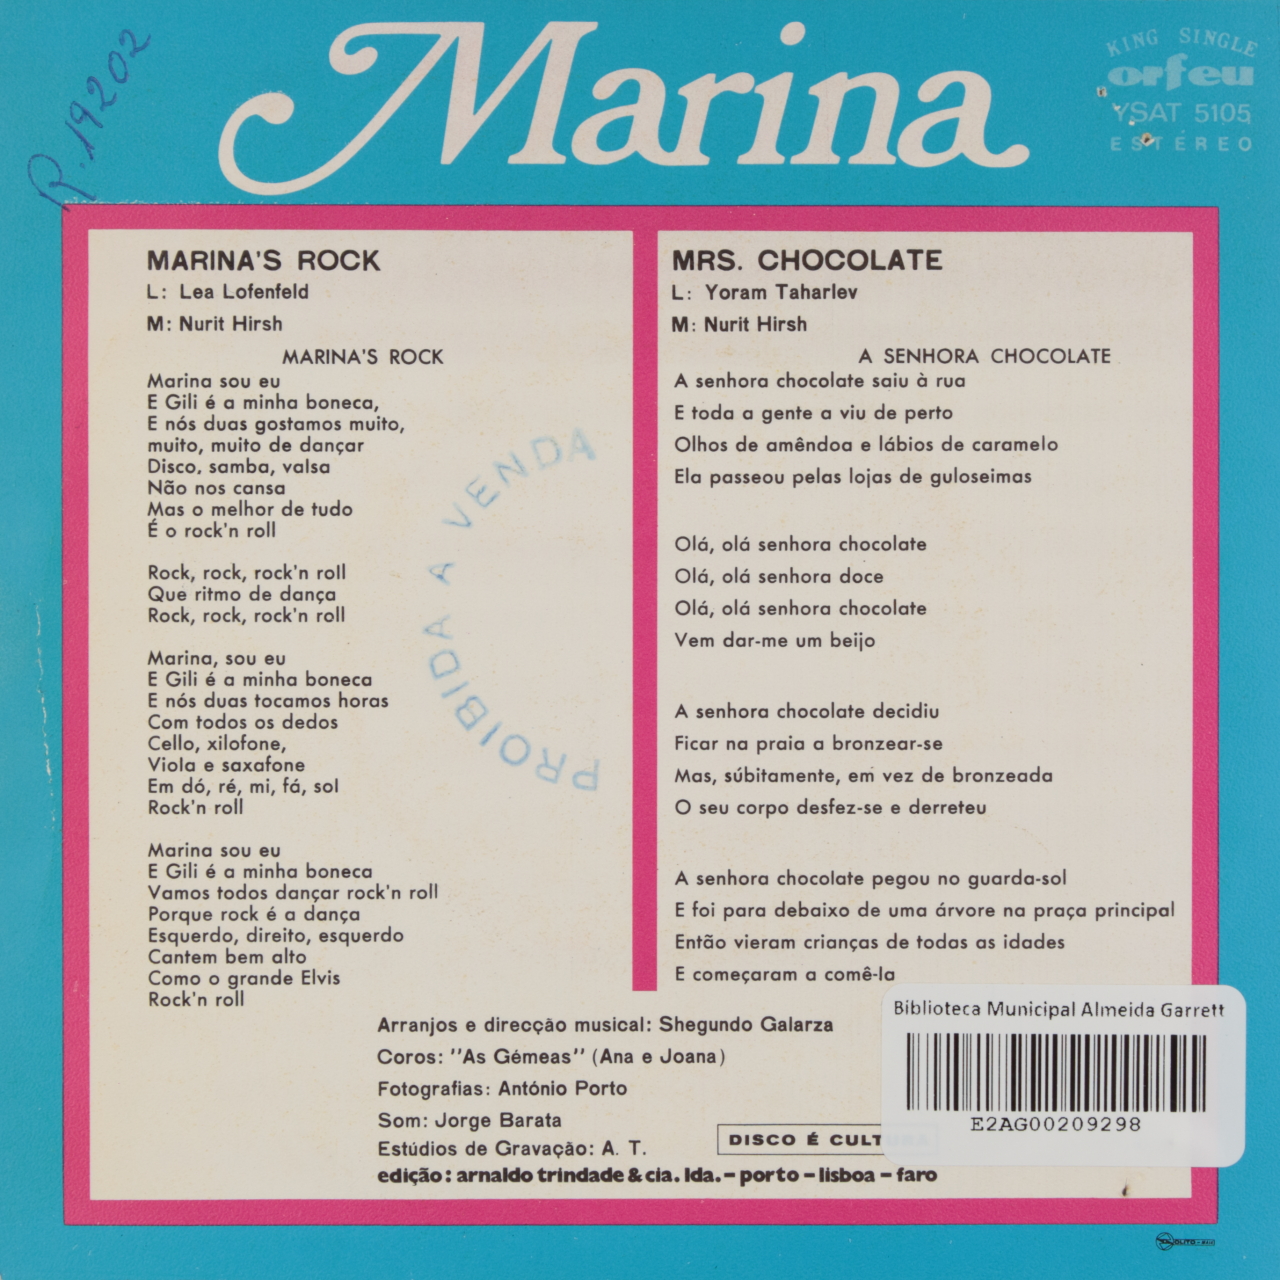 Marinas rock / Mrs. Chocolate